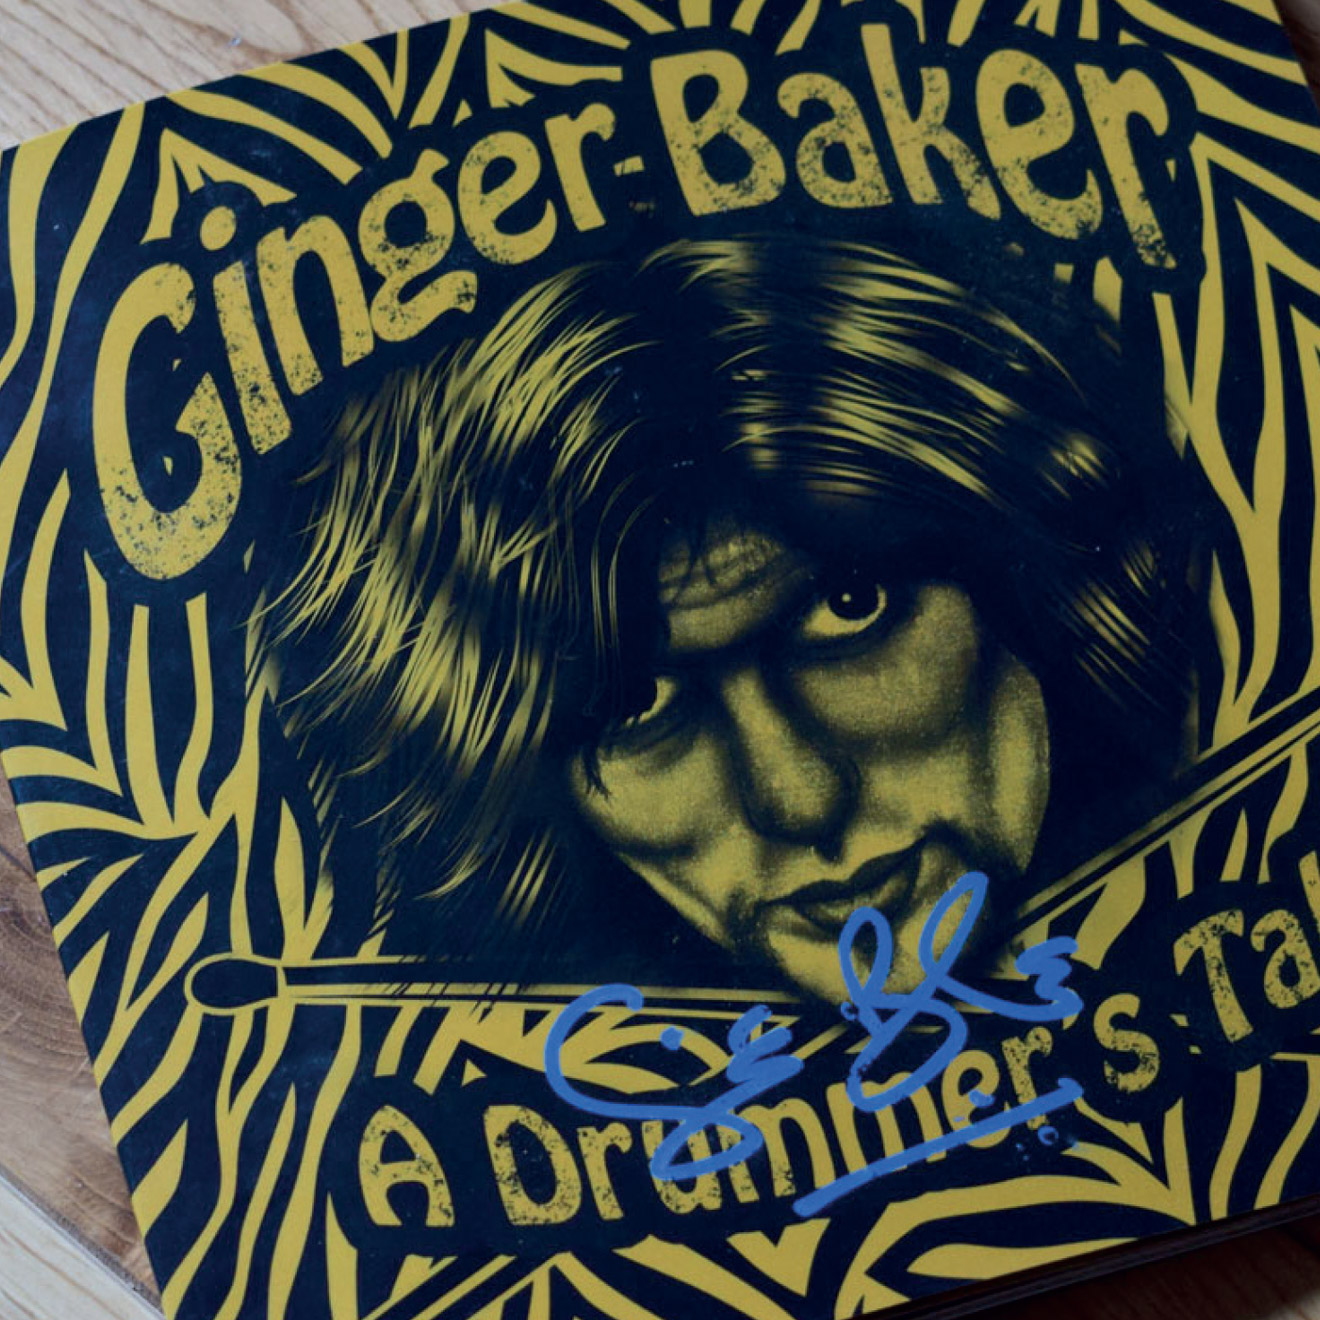 Ginger Baker A drummer's Tale book